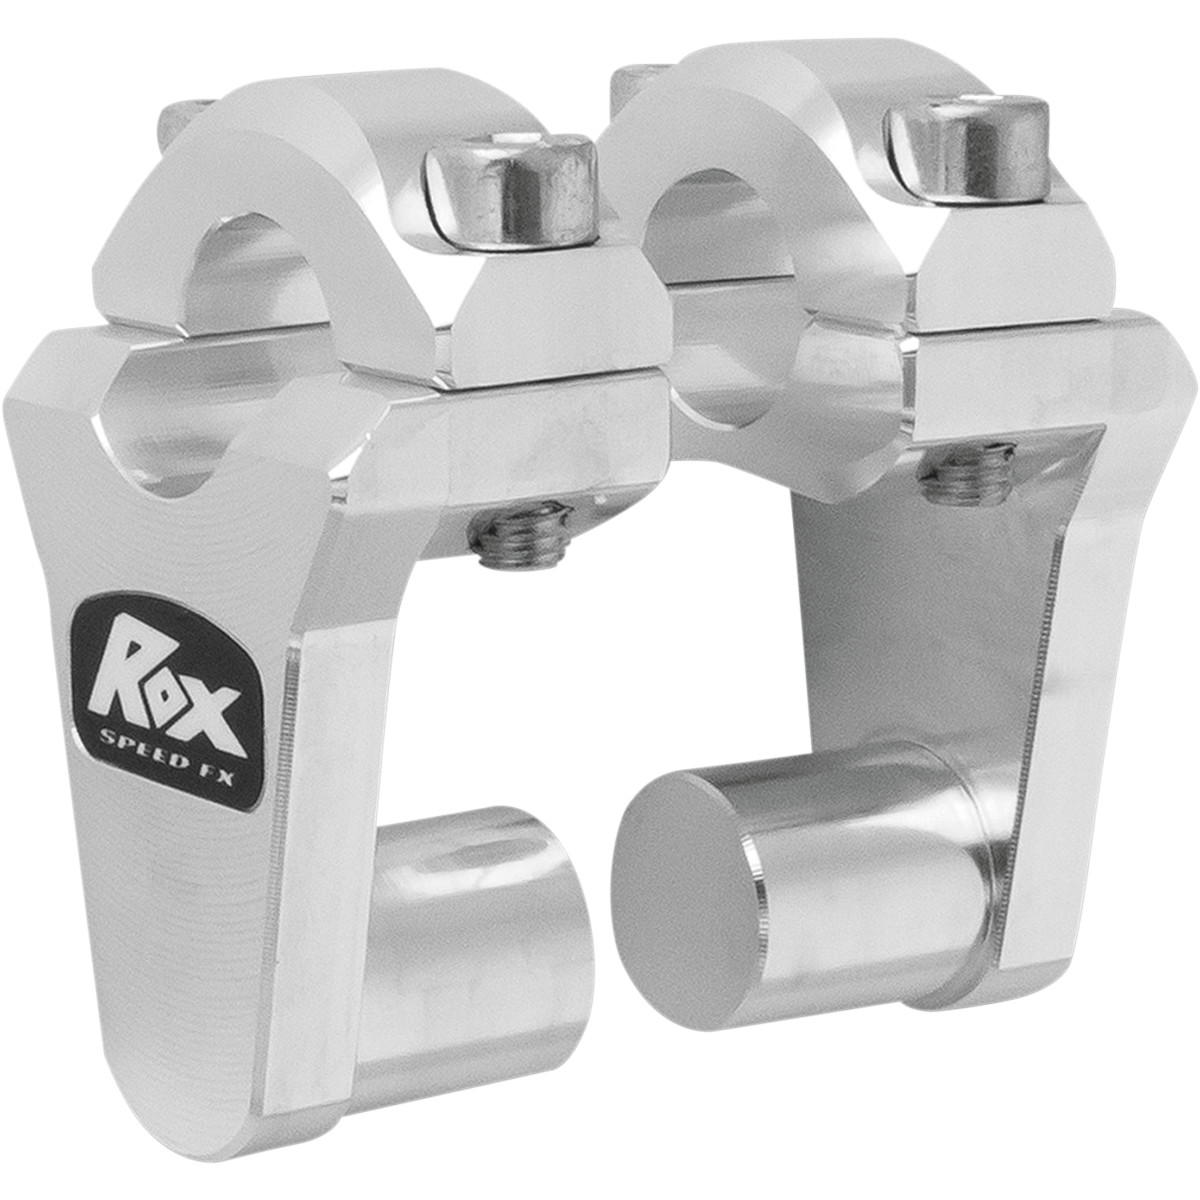 Stúpačky Rox Speed FX (50,8 mm, 22 mm)